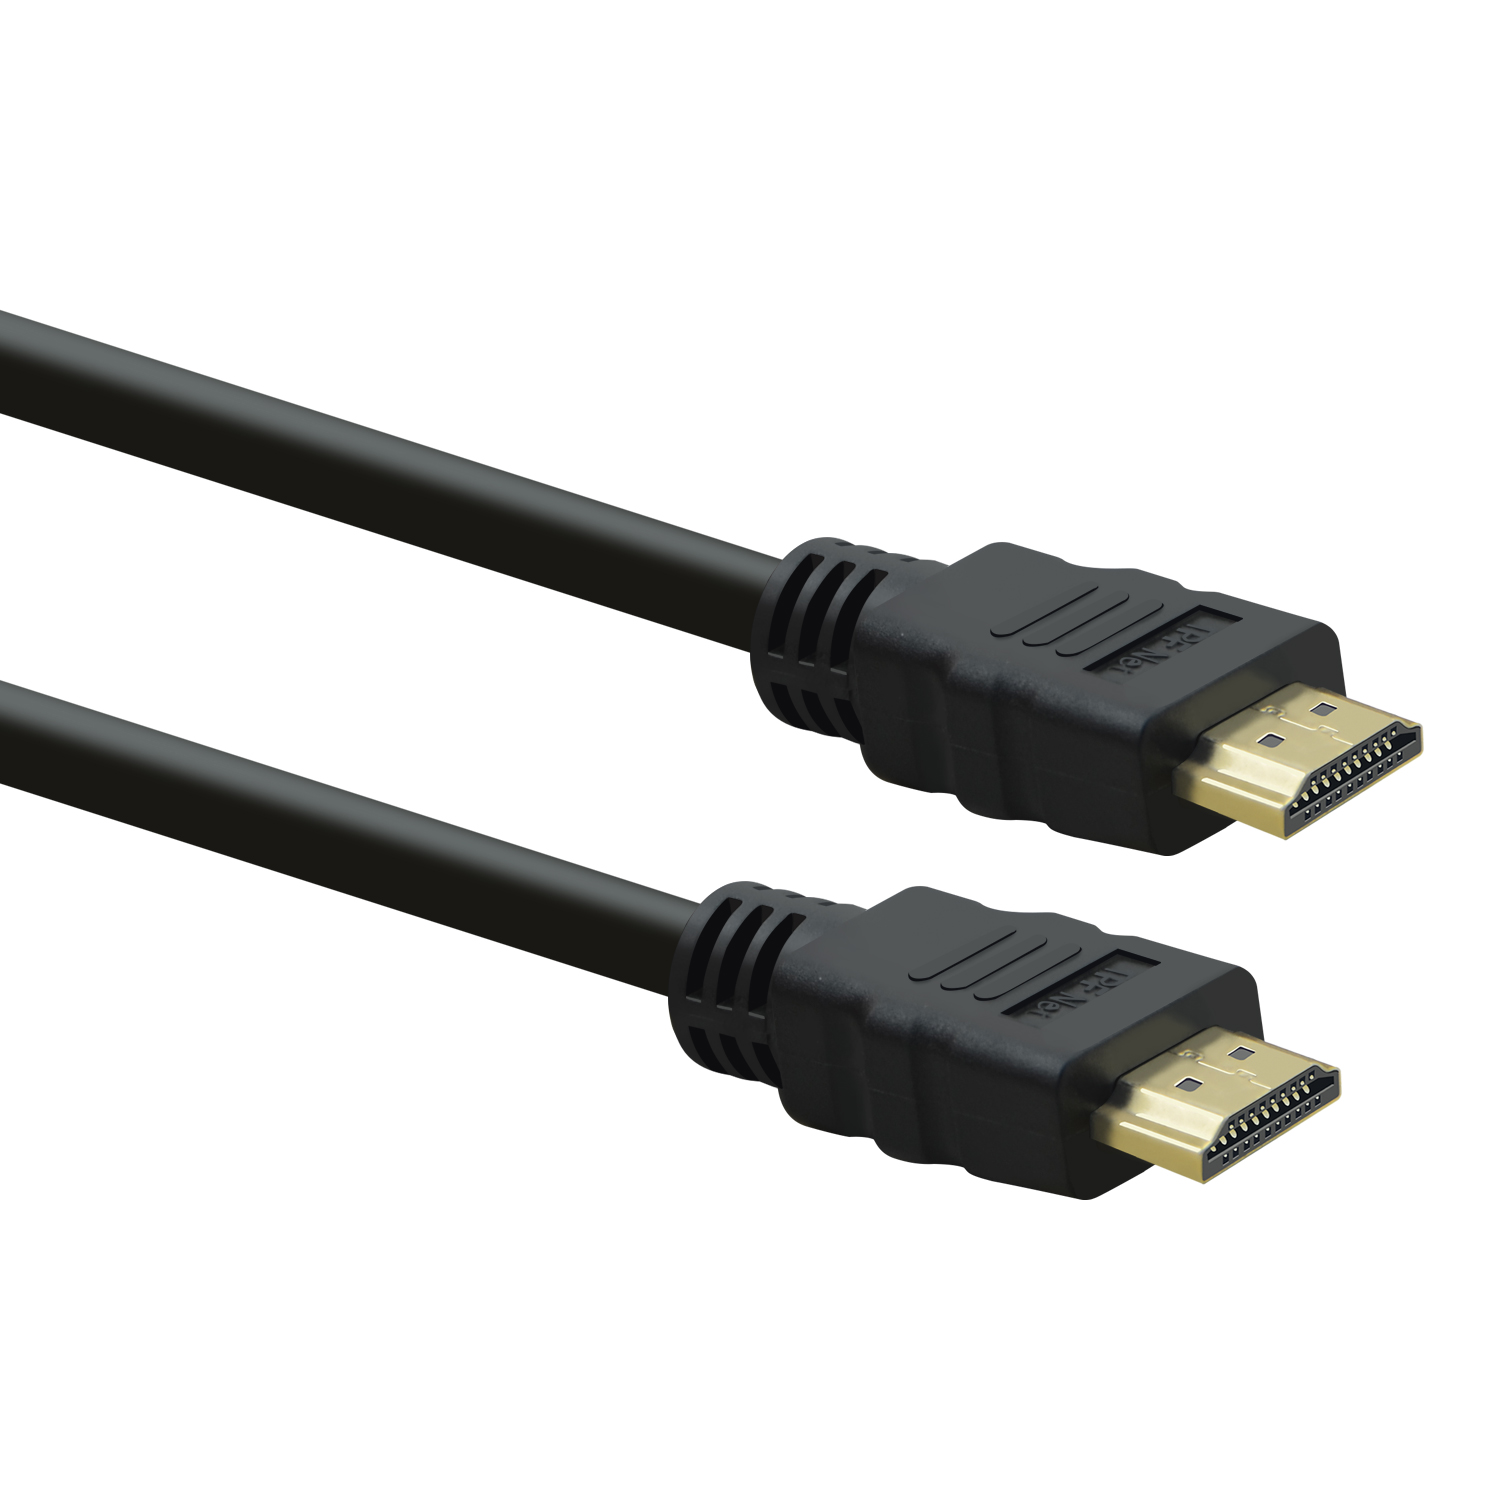 TPFNET 3er Pack Ultra HDMI-Kabel HDMI-Kabel mit Ethernet, abwärtskompatibel, 0,5m 8K, HD, Premium schwarz